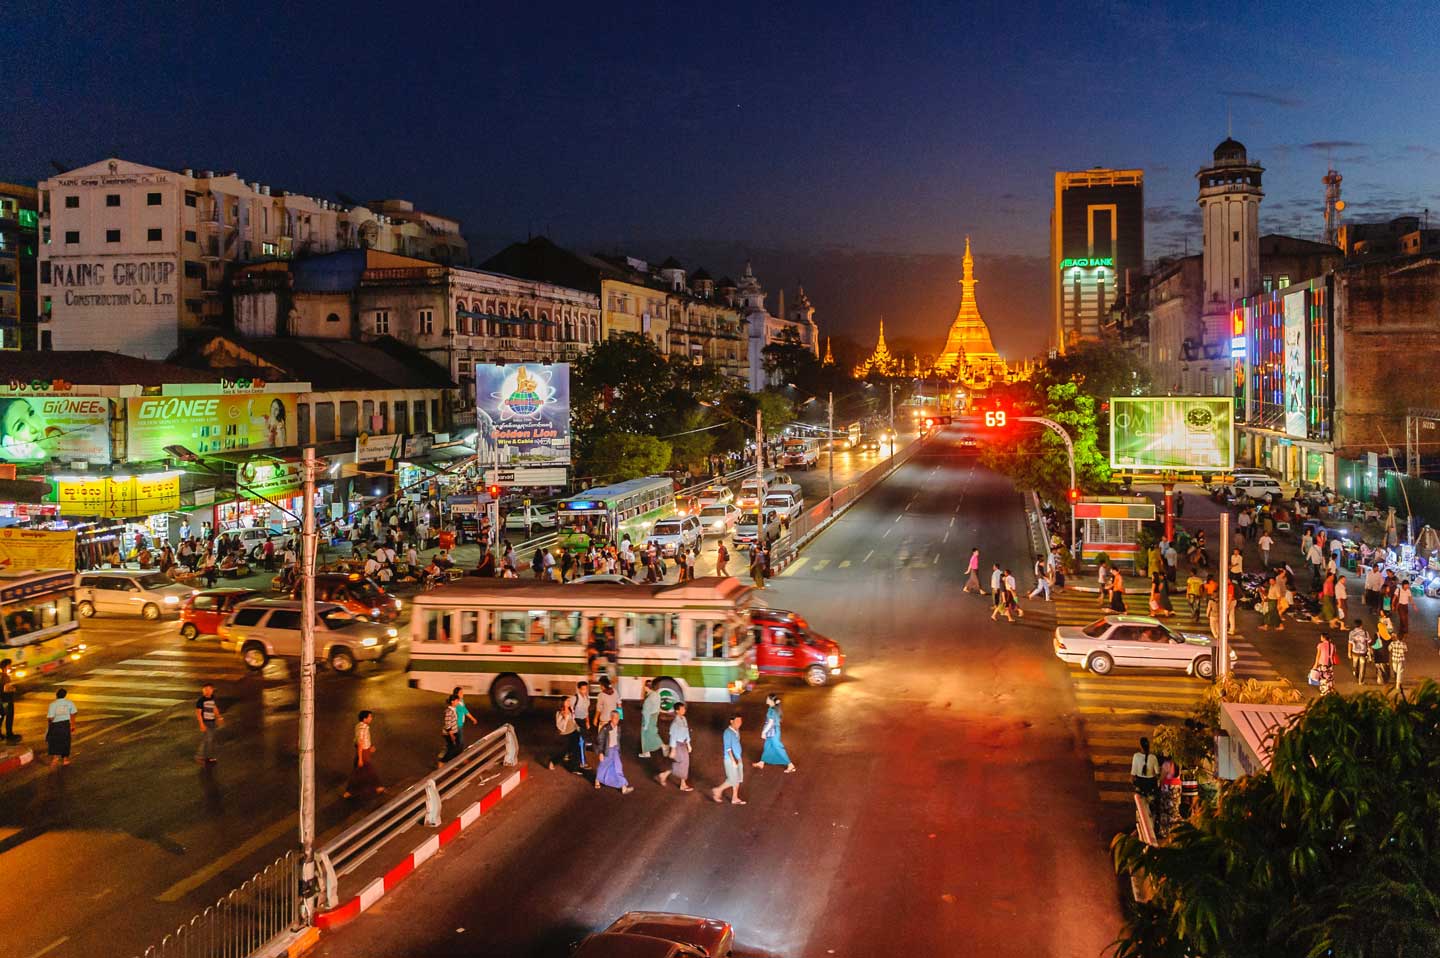 An active downtown scene of Yangon, Myanmar at night